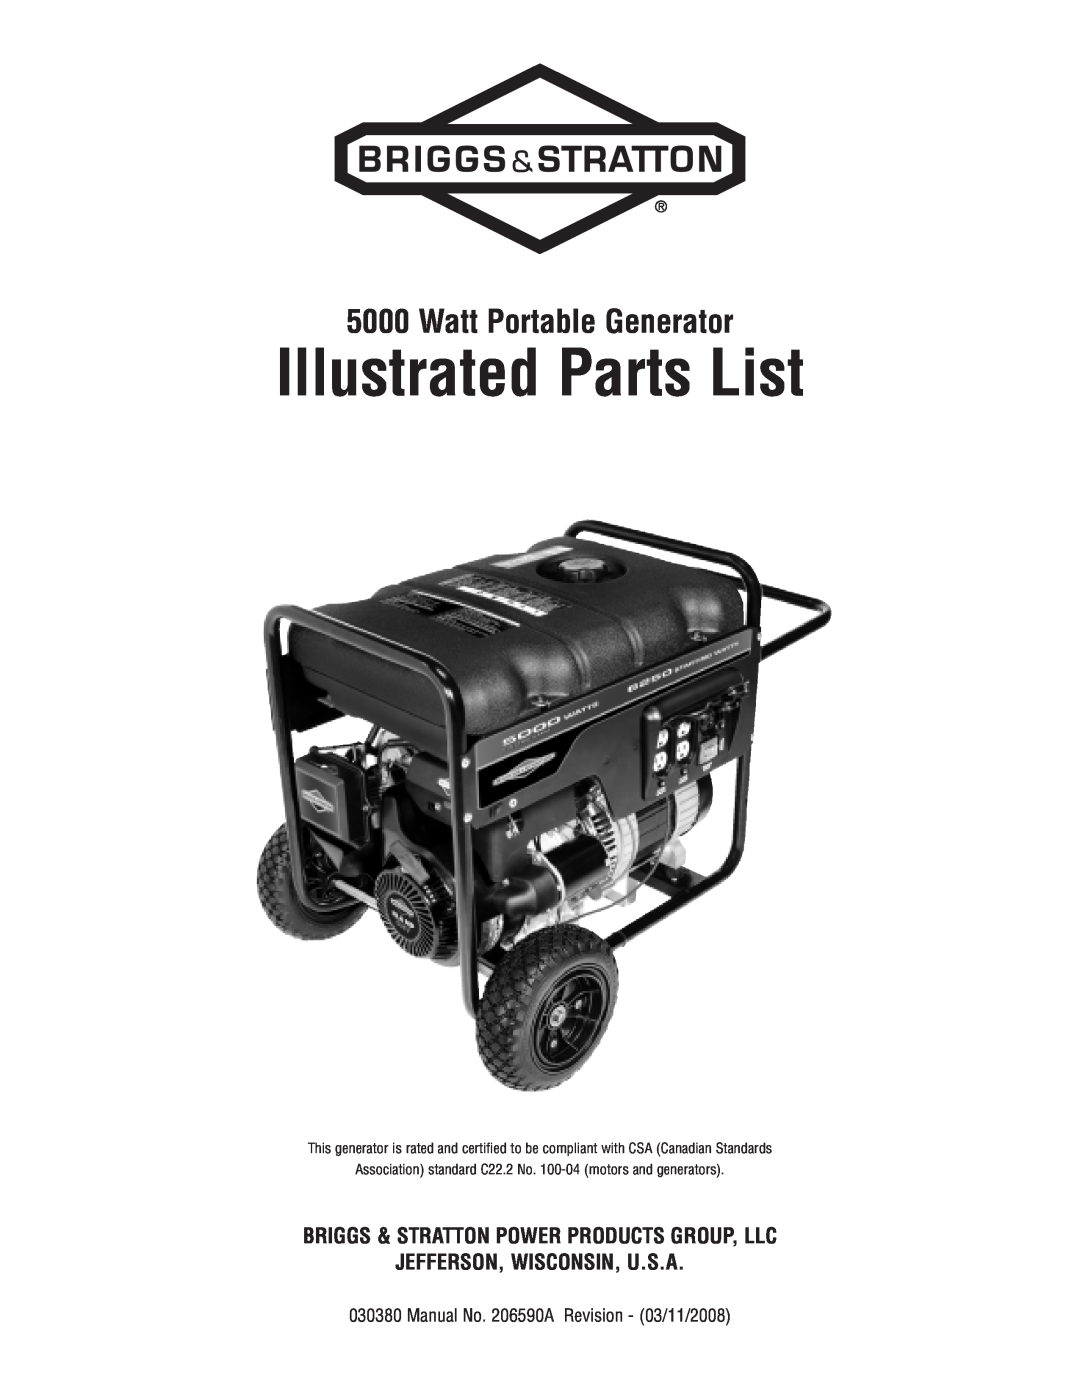 Briggs & Stratton 030380 manual Watt Portable Generator, Illustrated Parts List, Jefferson, Wisconsin, U.S.A 